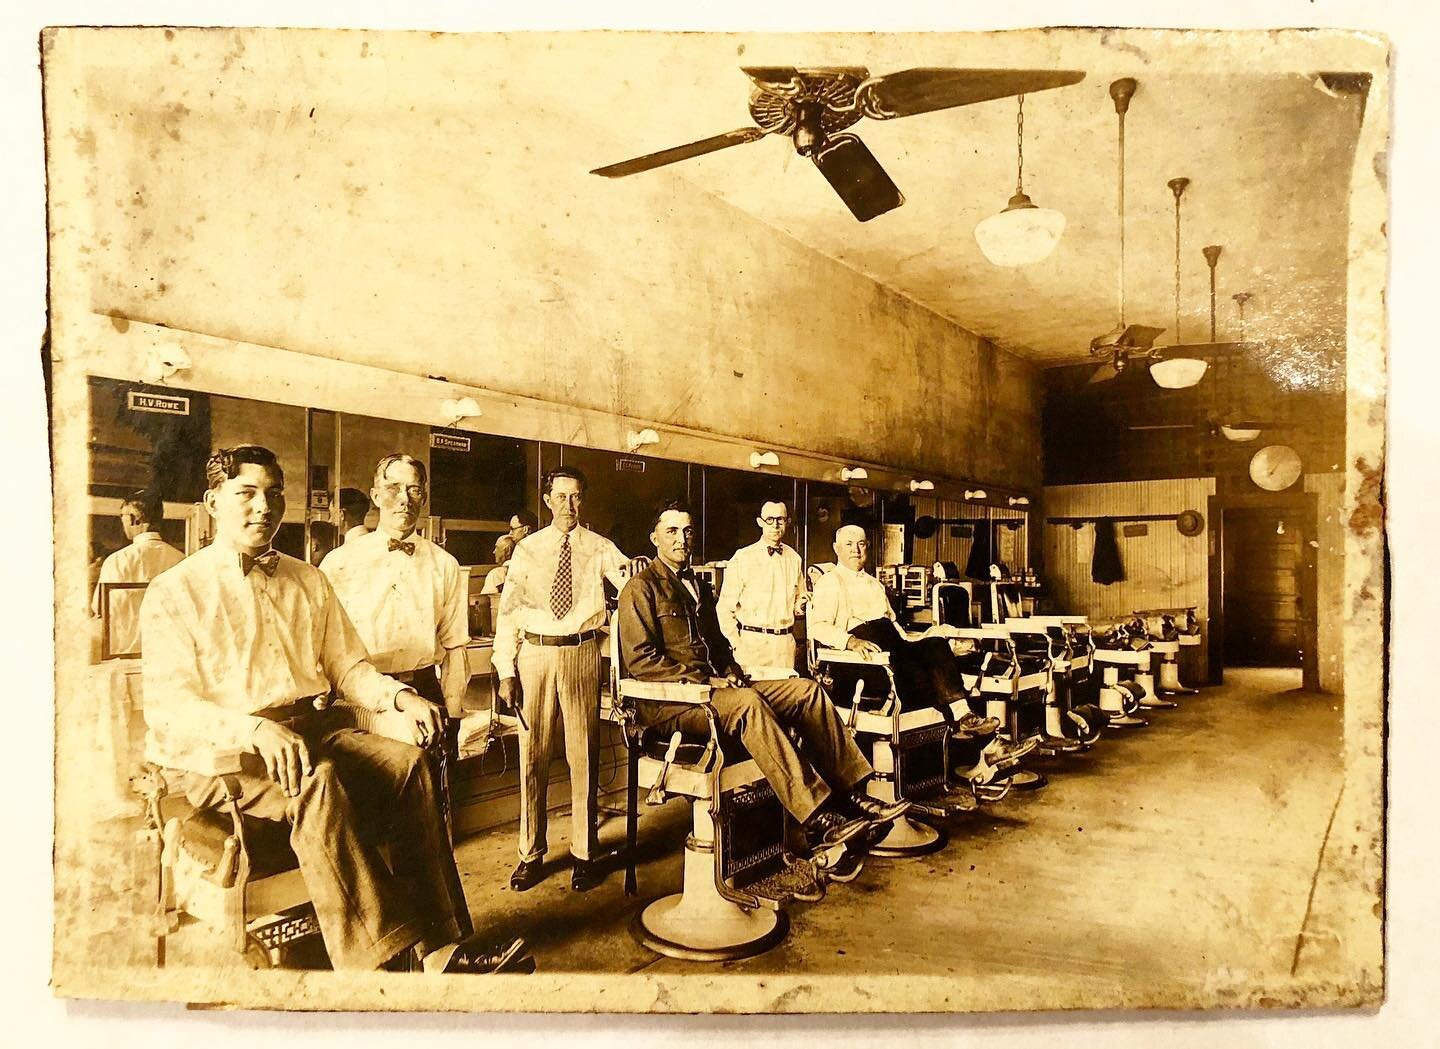 My great grandfathers barber shop in Savannah GA #spearman #savannah #barbershop #irish #ireland #family #love #grandma #greatgrandfather #historic #spearmanfamily #downtownsavannah #savannahart #instagood #instalike #barber #savannahgeorgia #1800s #